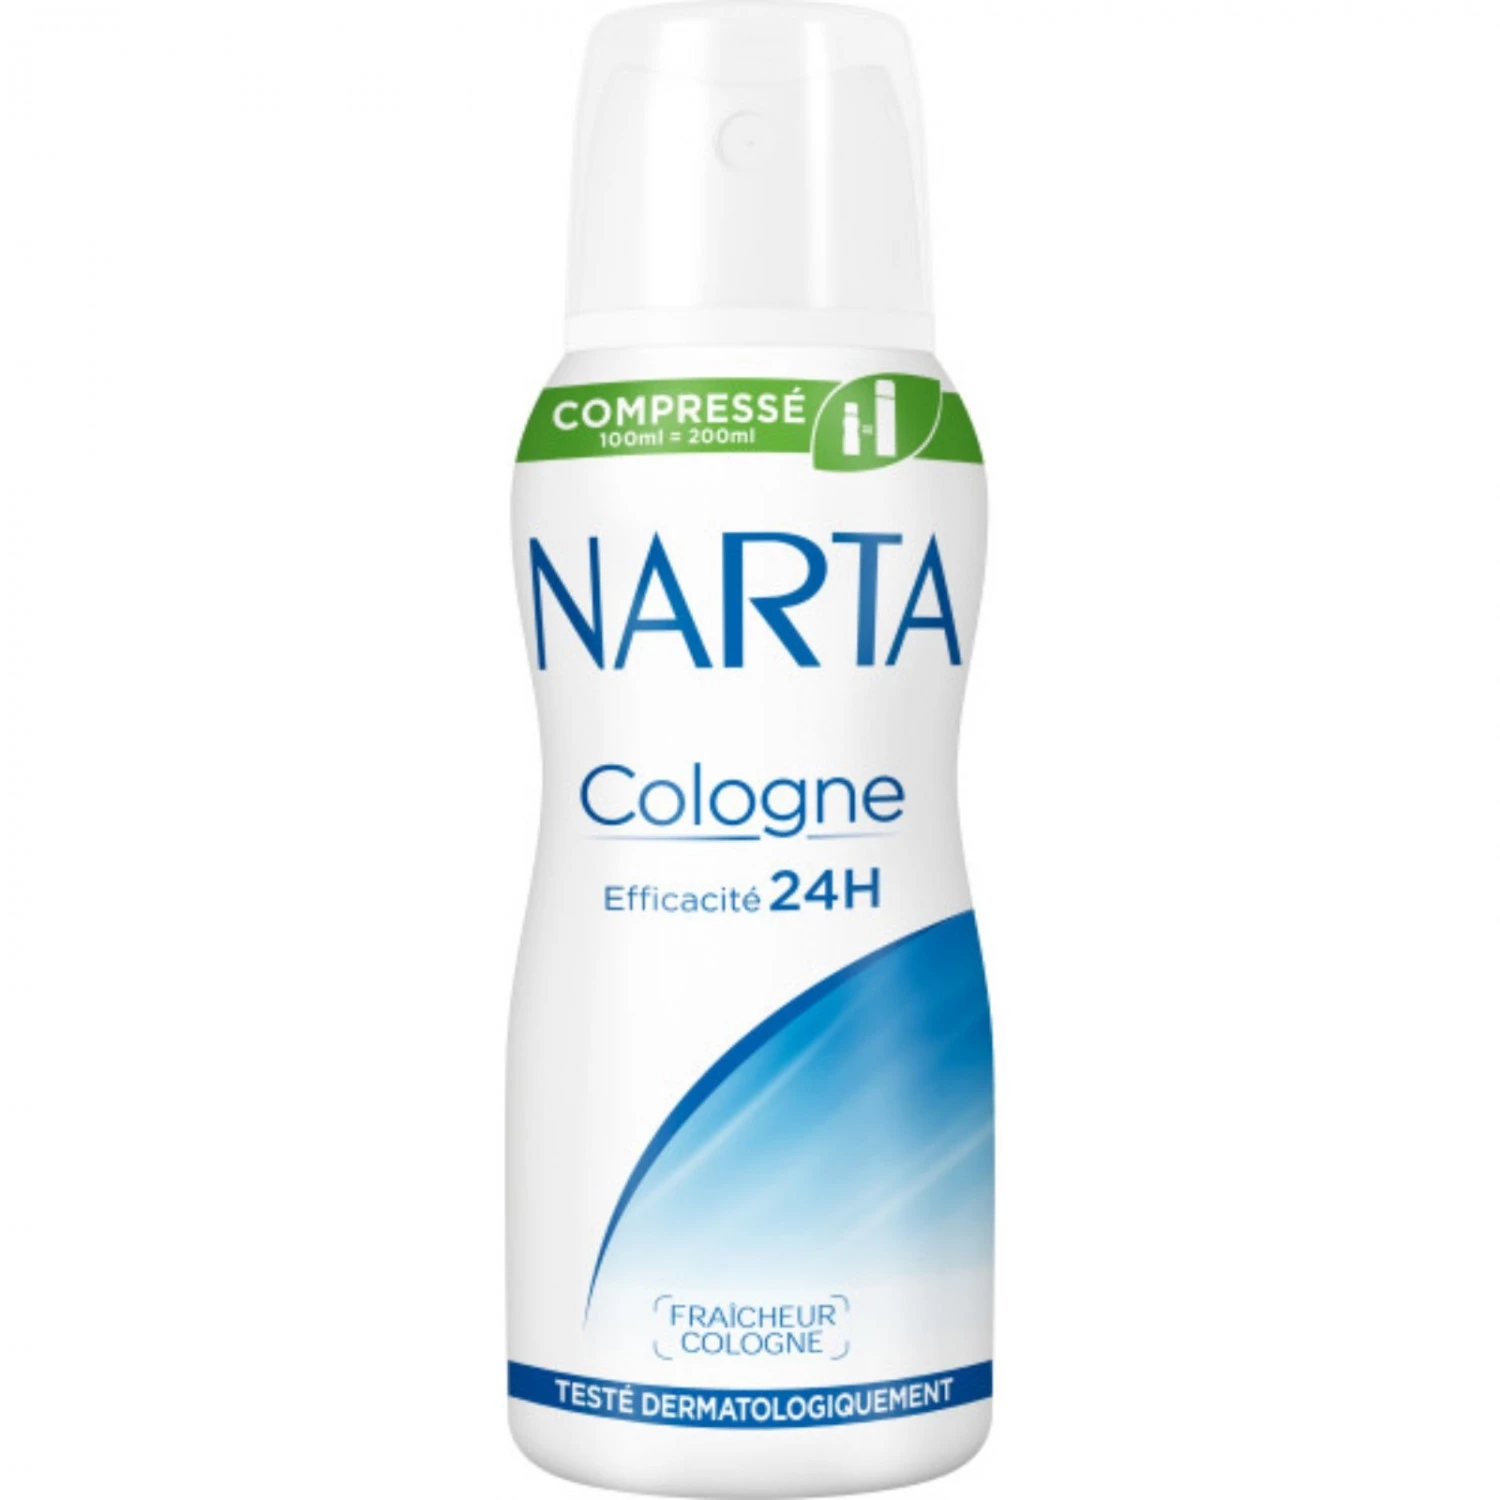 Compressed cologne deodorant 24h NARTA spray 100ml